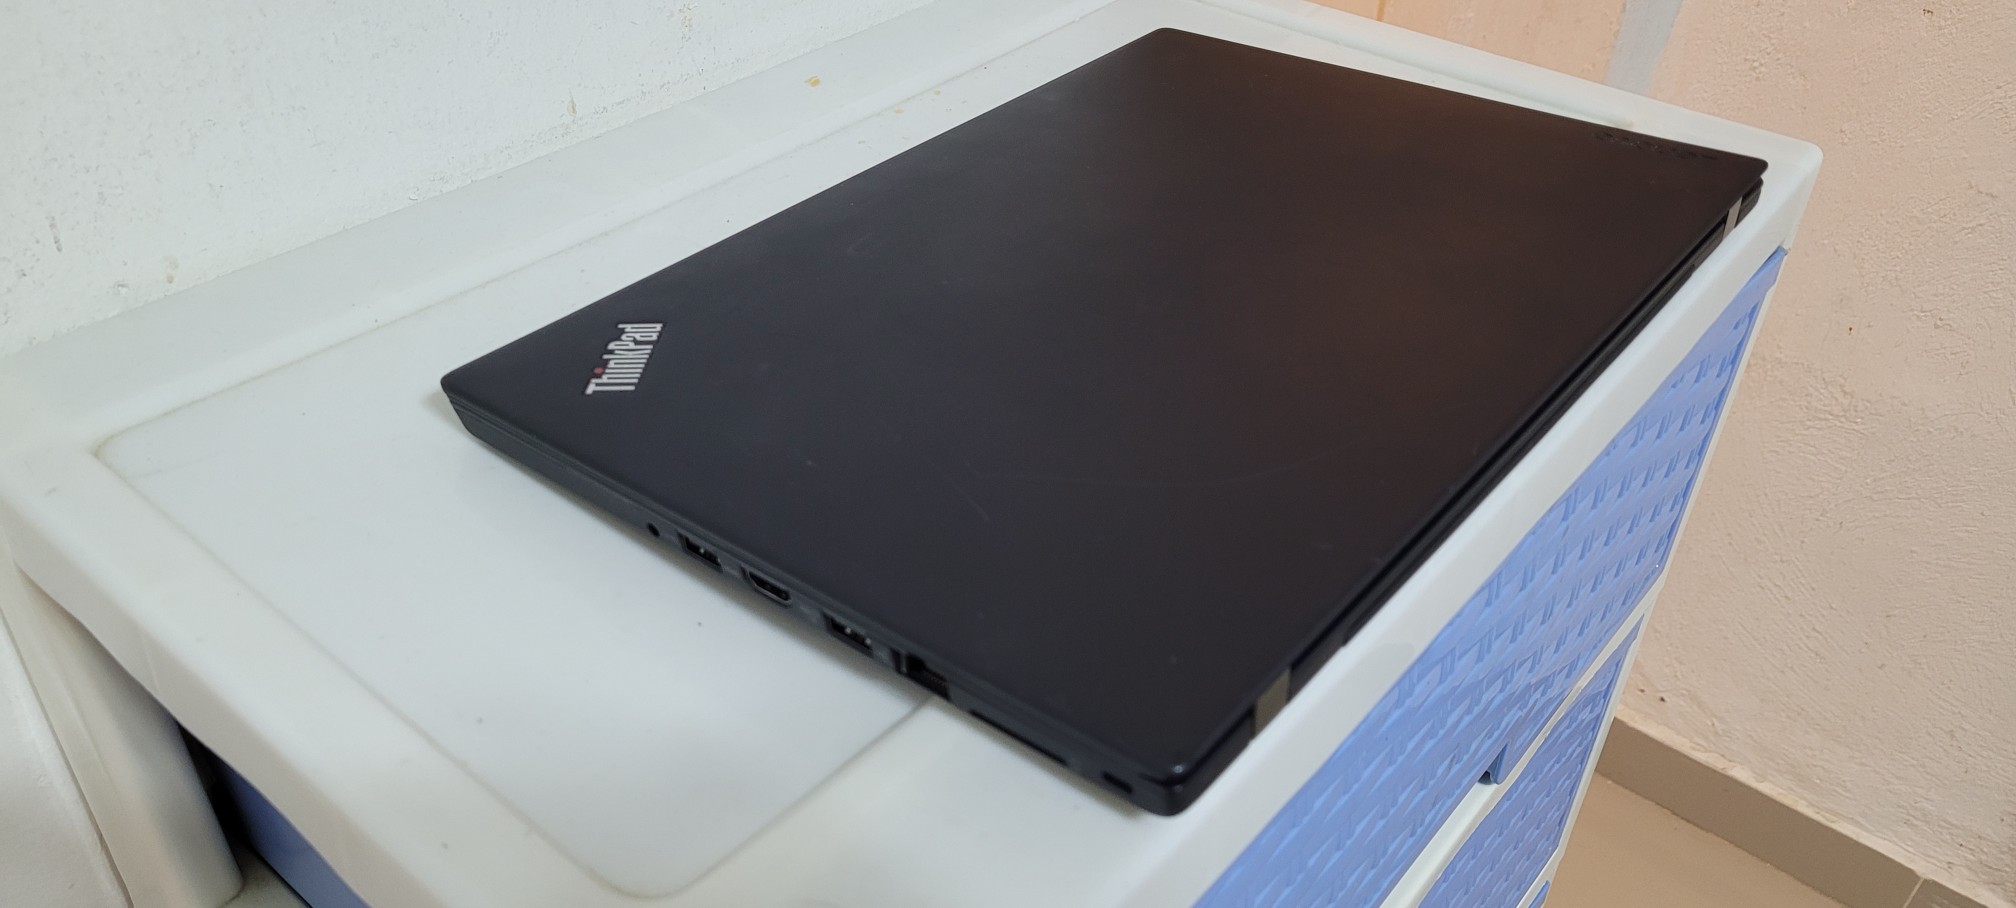 computadoras y laptops - laptop lenovo 14 Pulg Core i7 Ram 8gb Disco 256gb SSD Solido 1080p 2